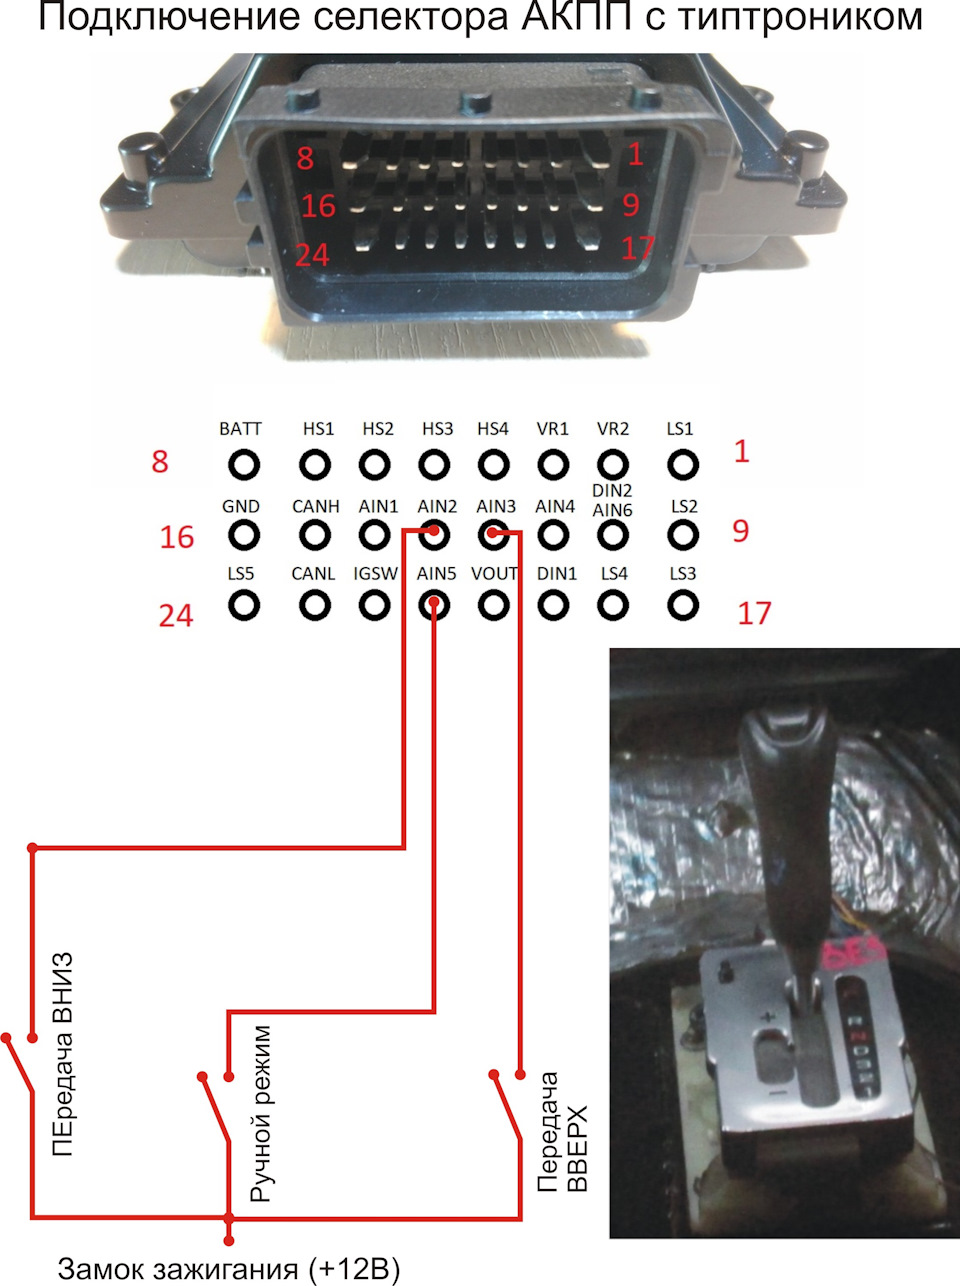 Connection description universal automatic transmission controller ATECU new